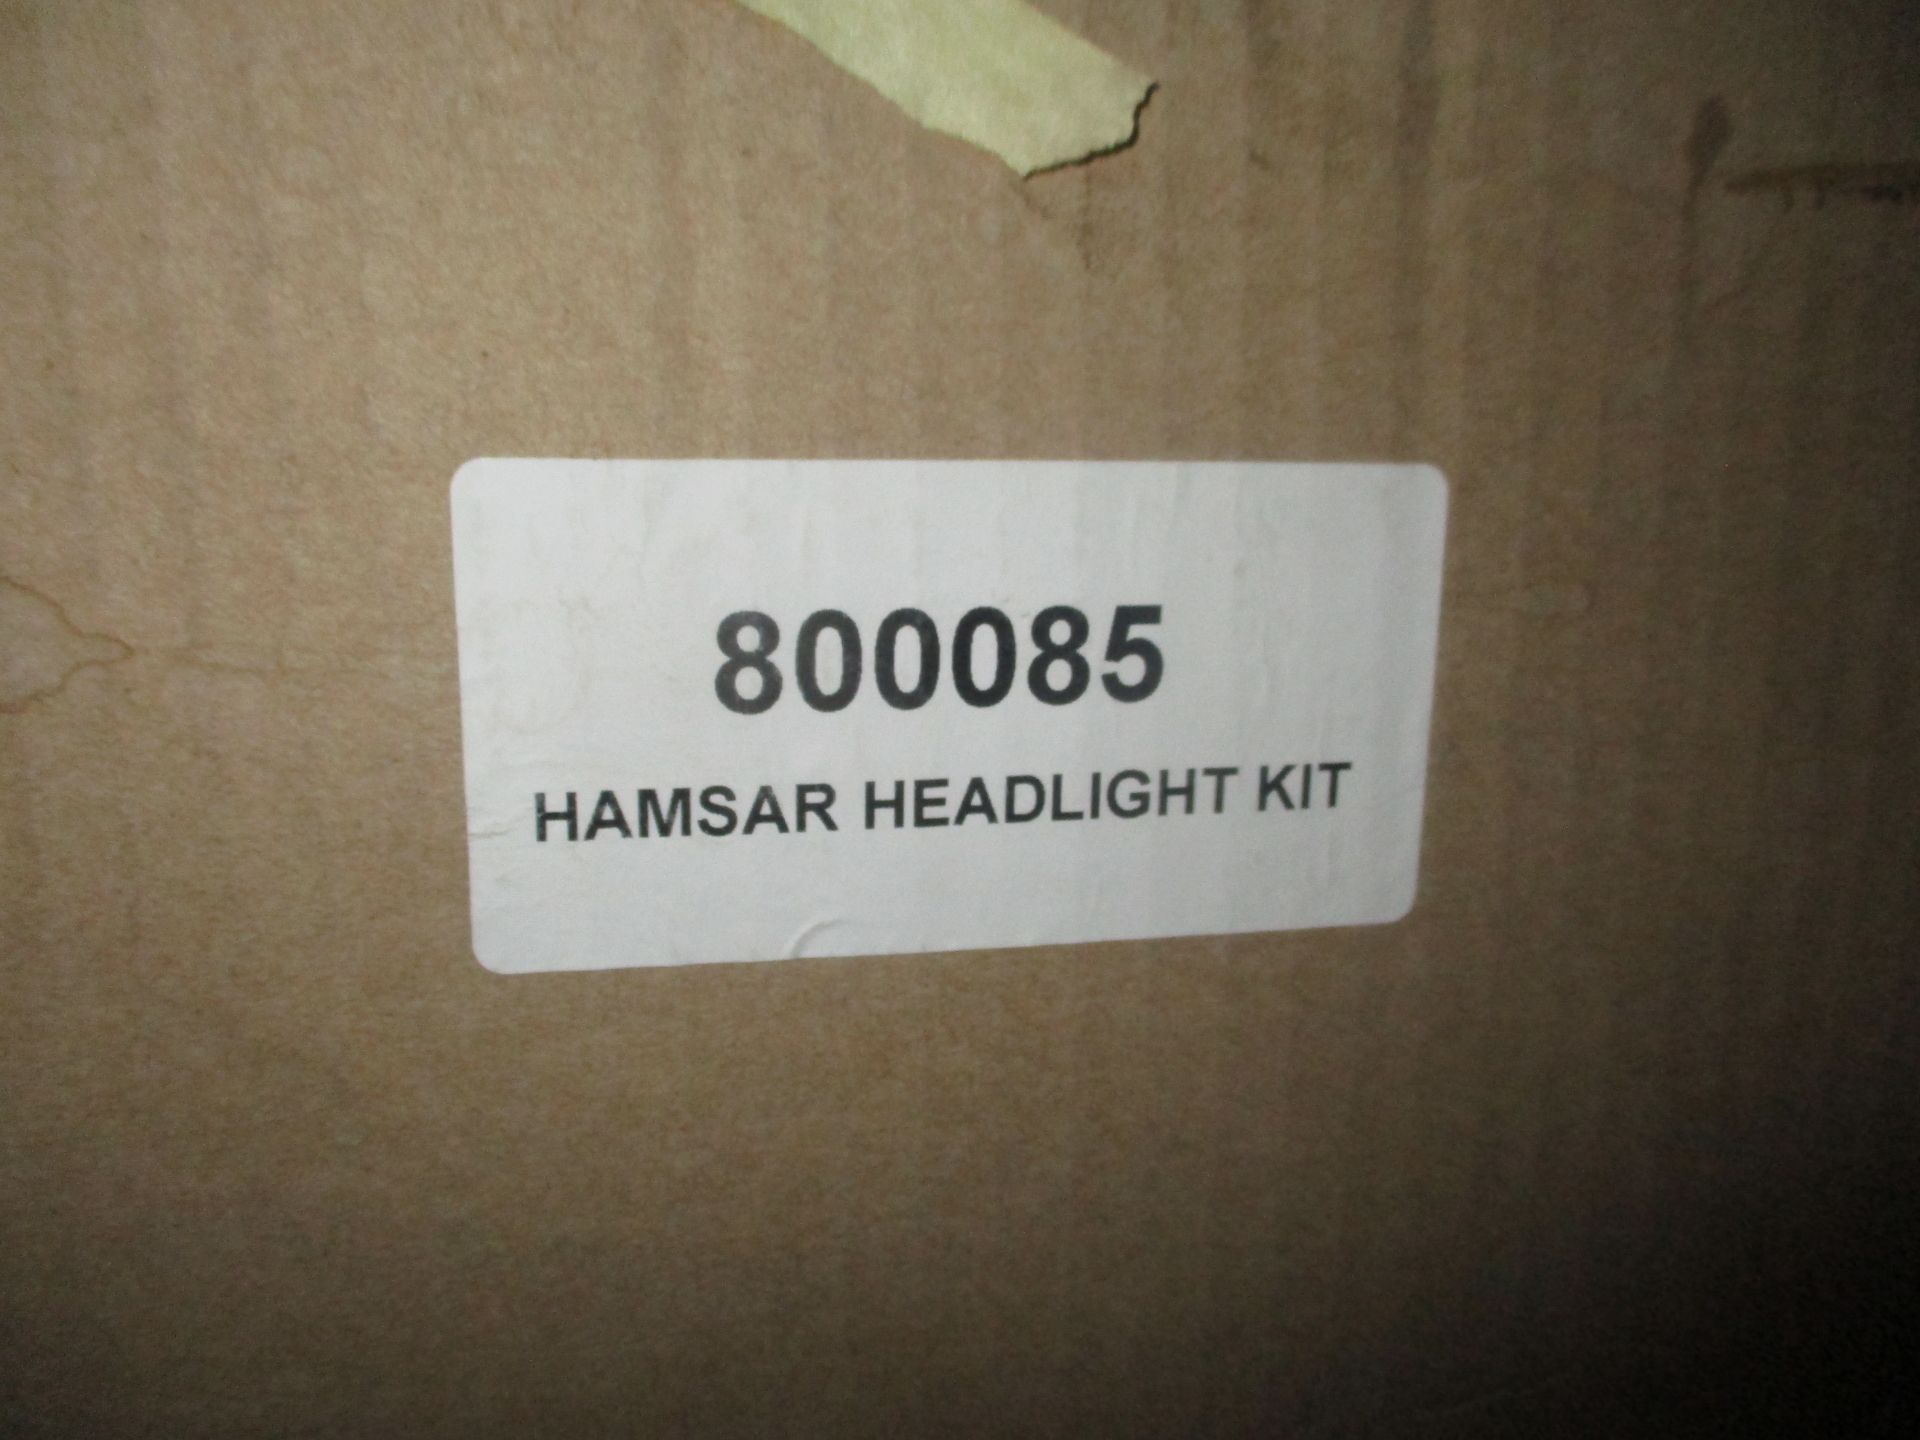 6 BOXES HAMSAR HEAD LIGHT KITS PART NO. 800085 - Image 2 of 3